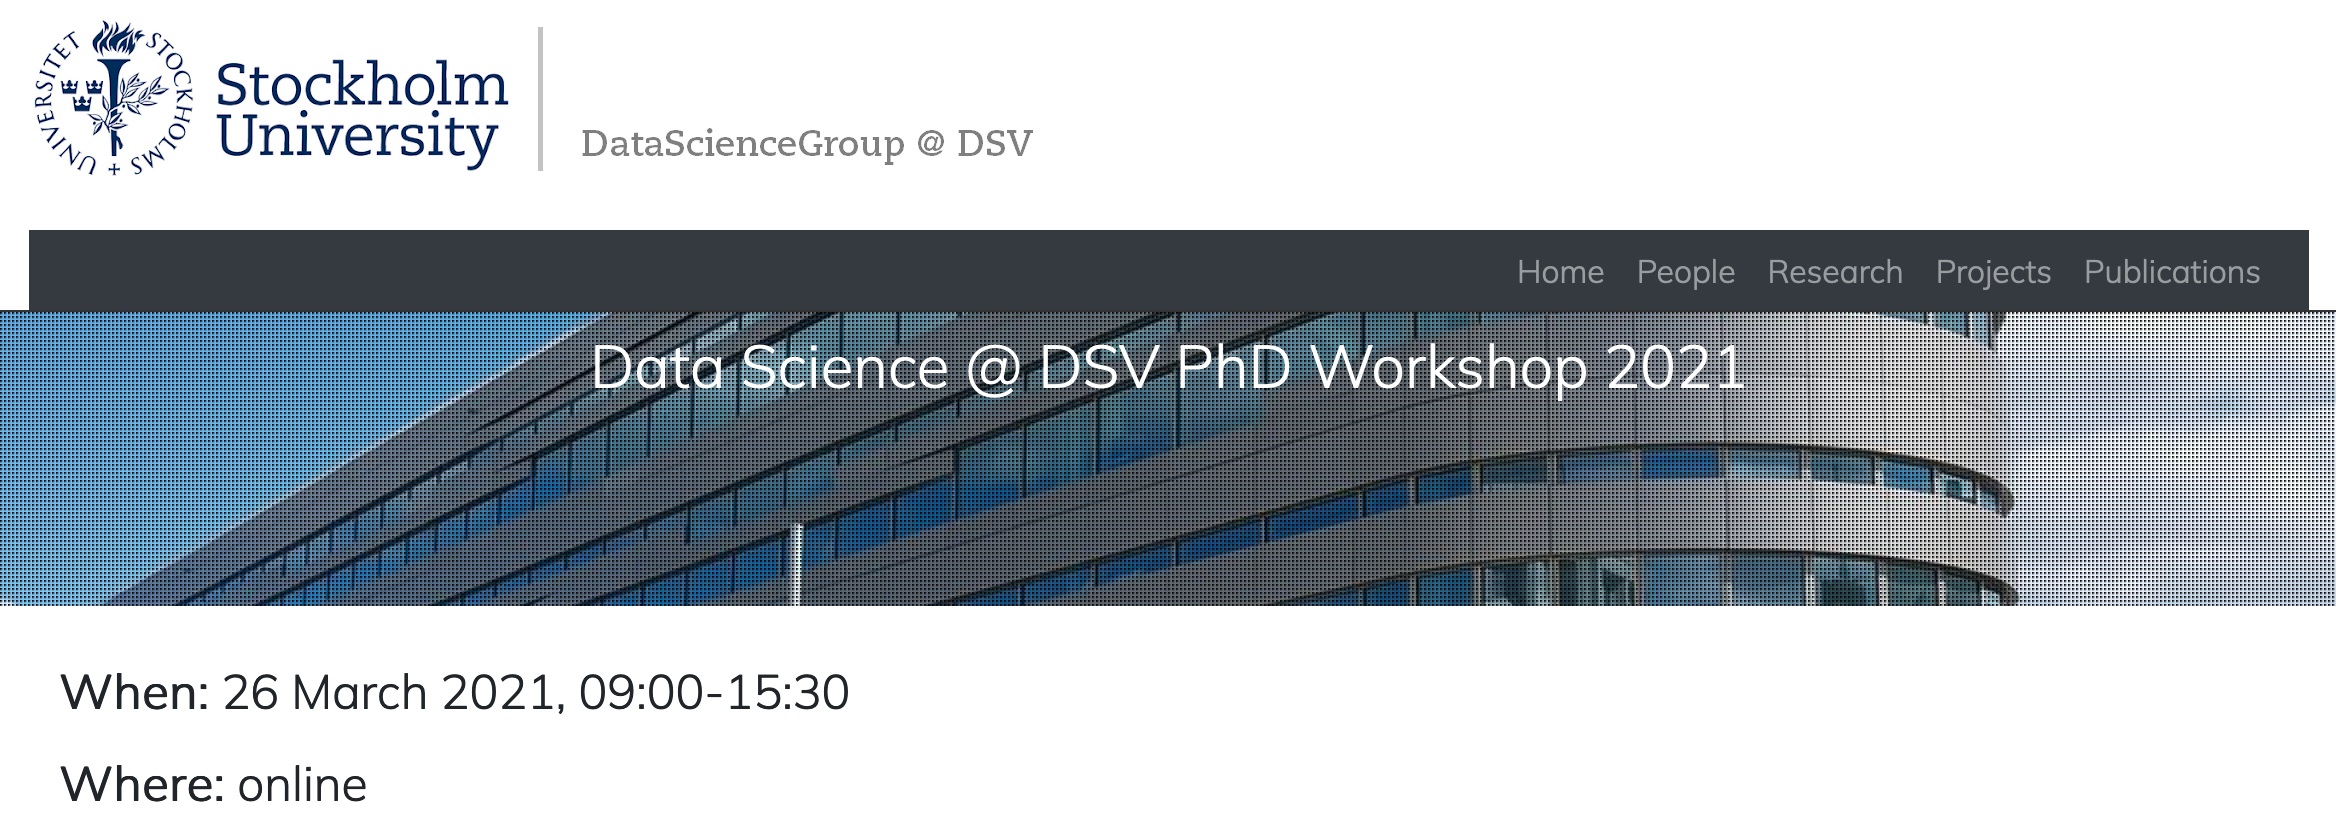 Data Science @ DSV Ph.D. Workshop on March 26, 2021